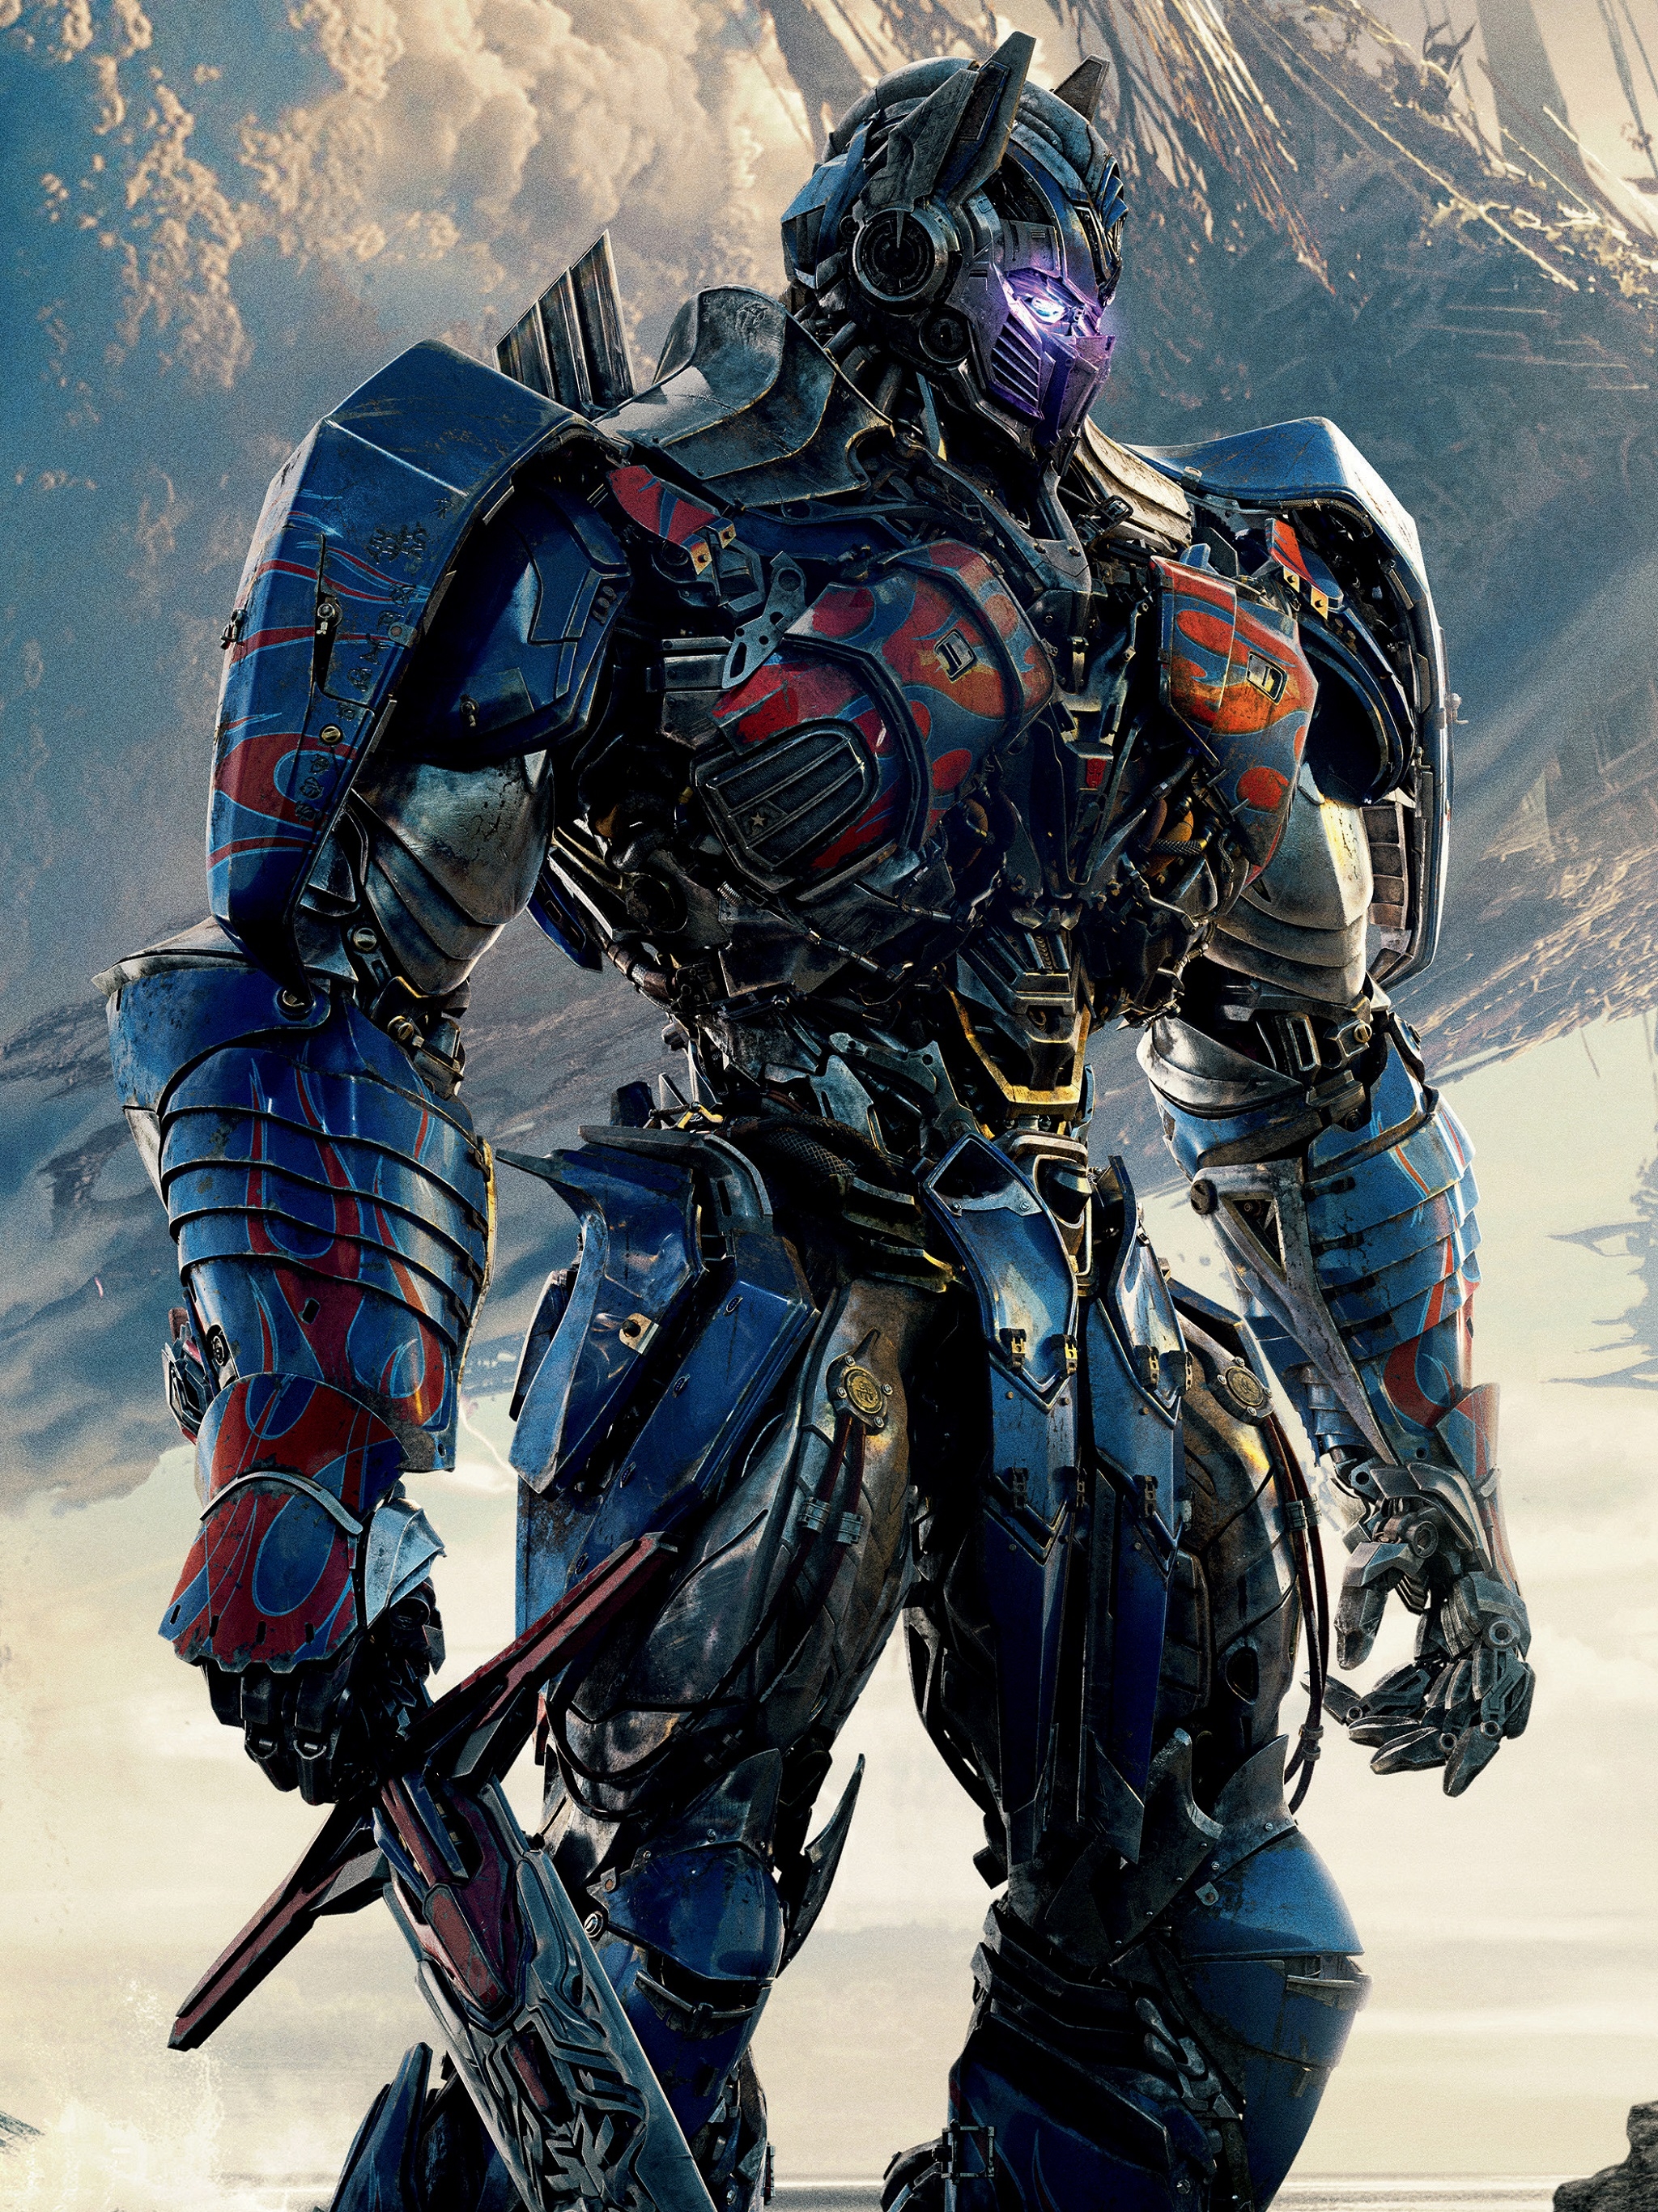 Optimus Prime Transformers The Last Knight for Apple iPad Pro resolution